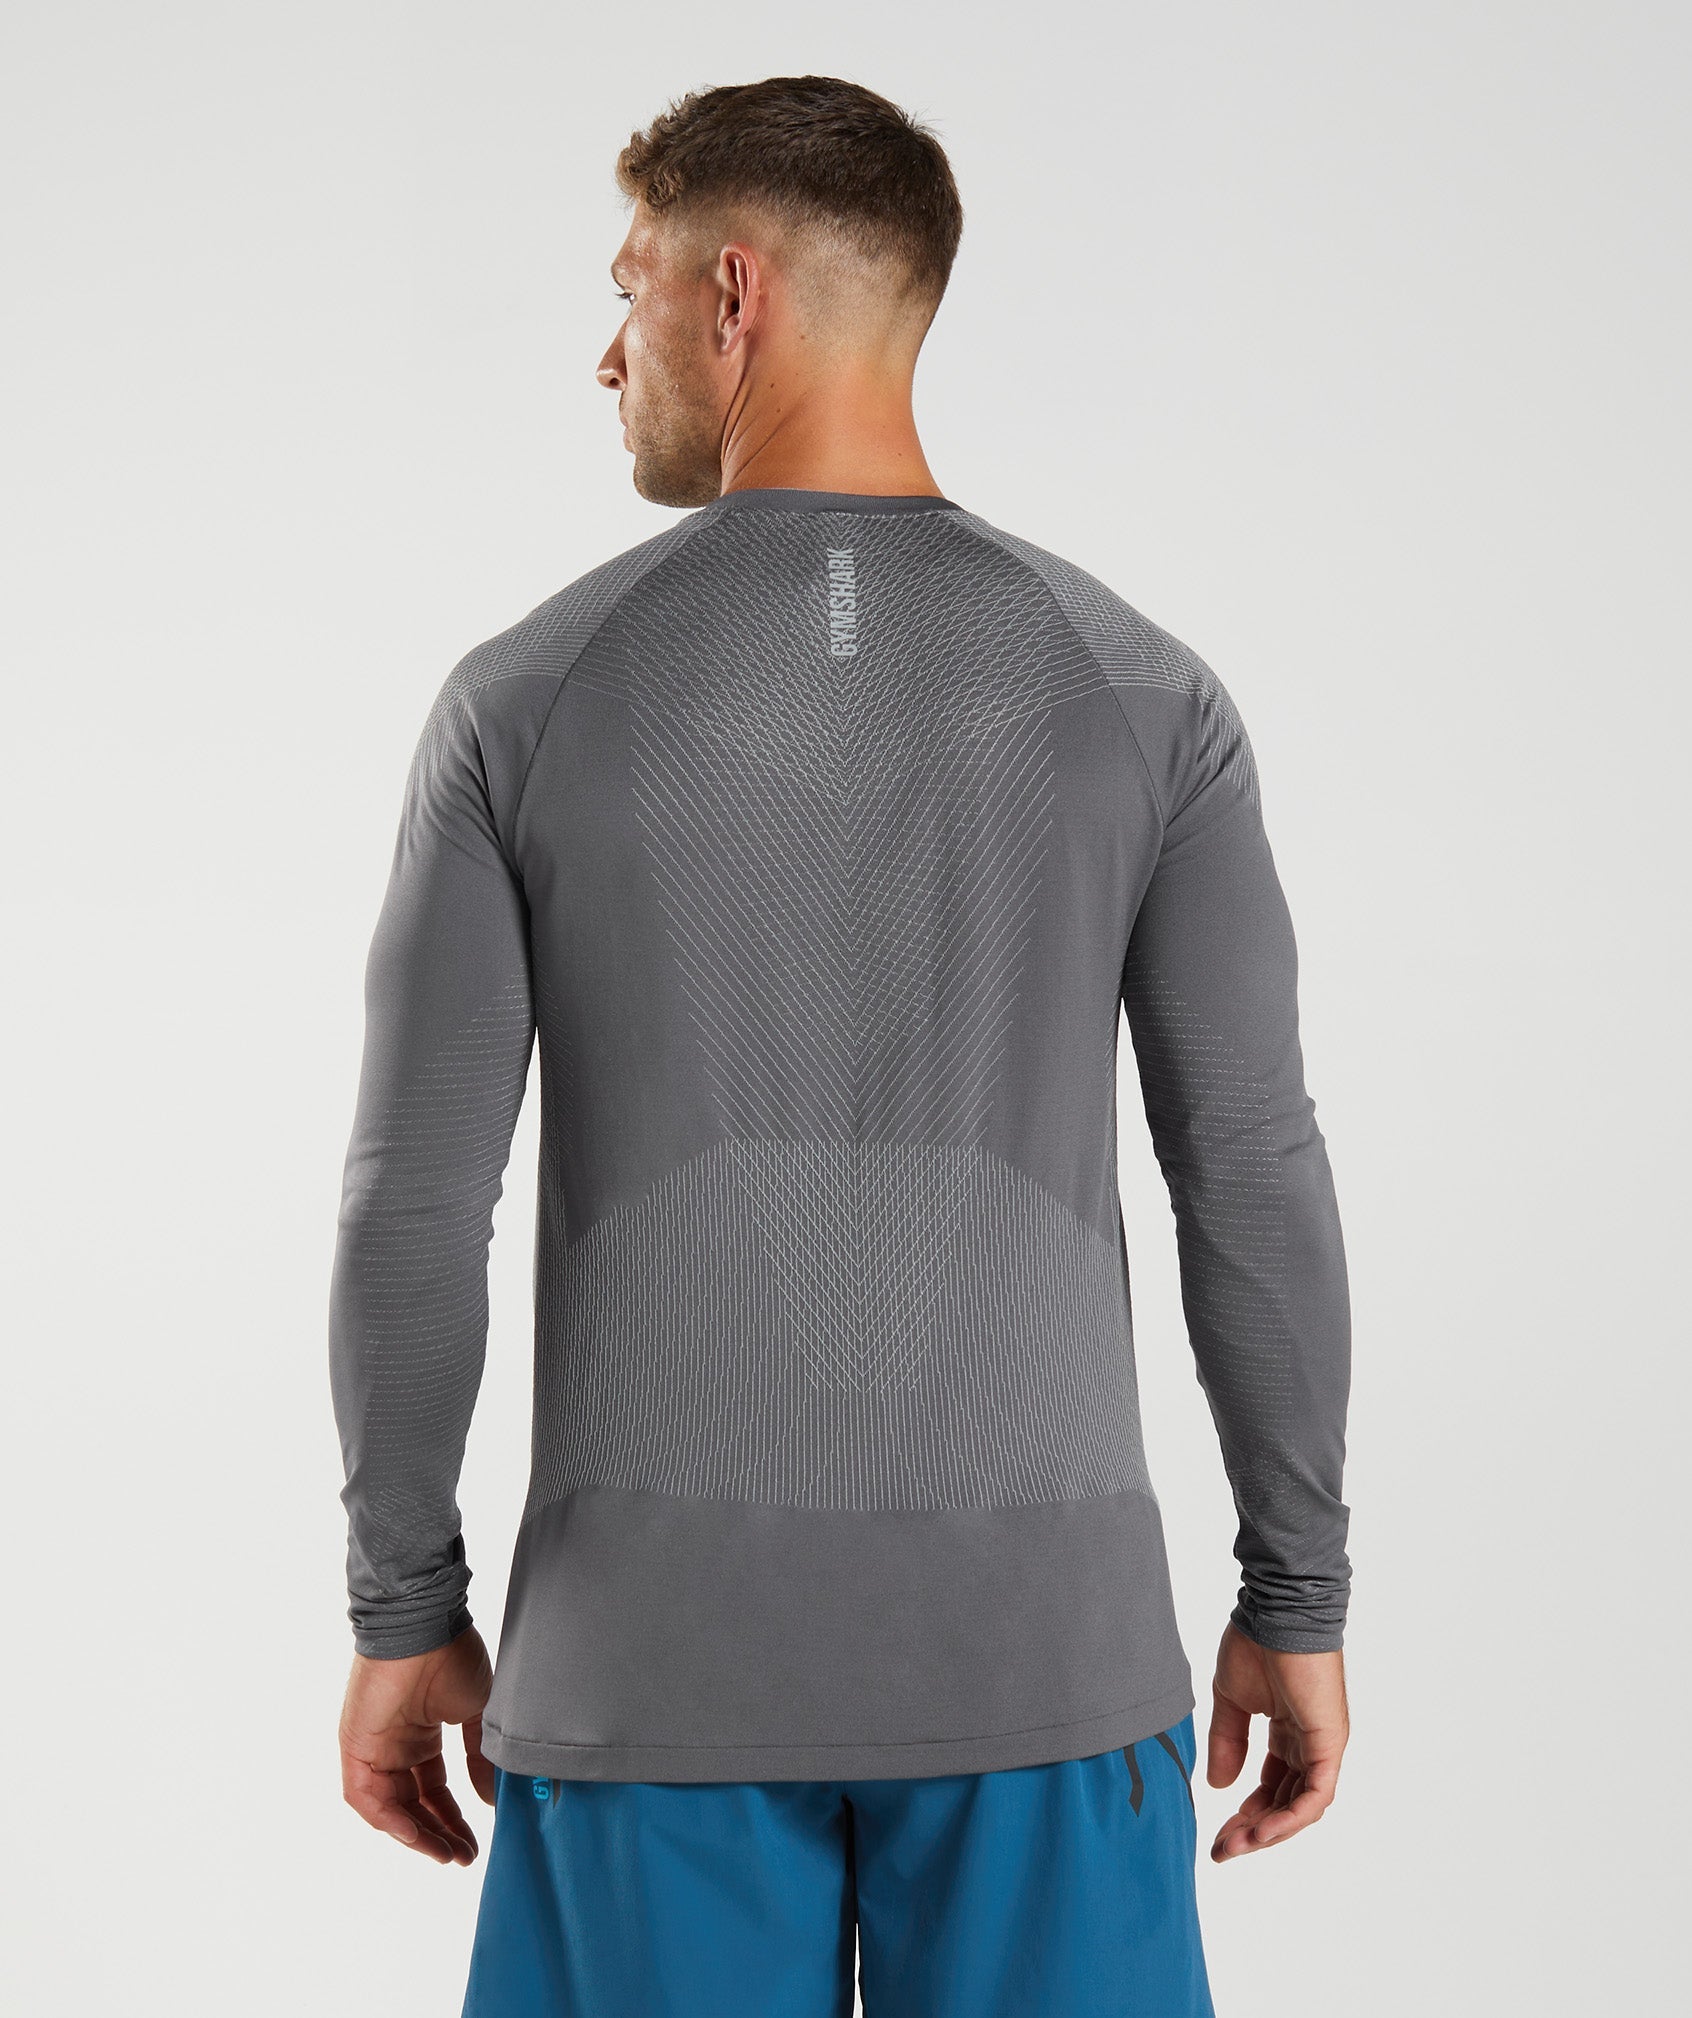 Apex Seamless Long Sleeve T-Shirt in Silhouette Grey/Smokey Grey - view 2